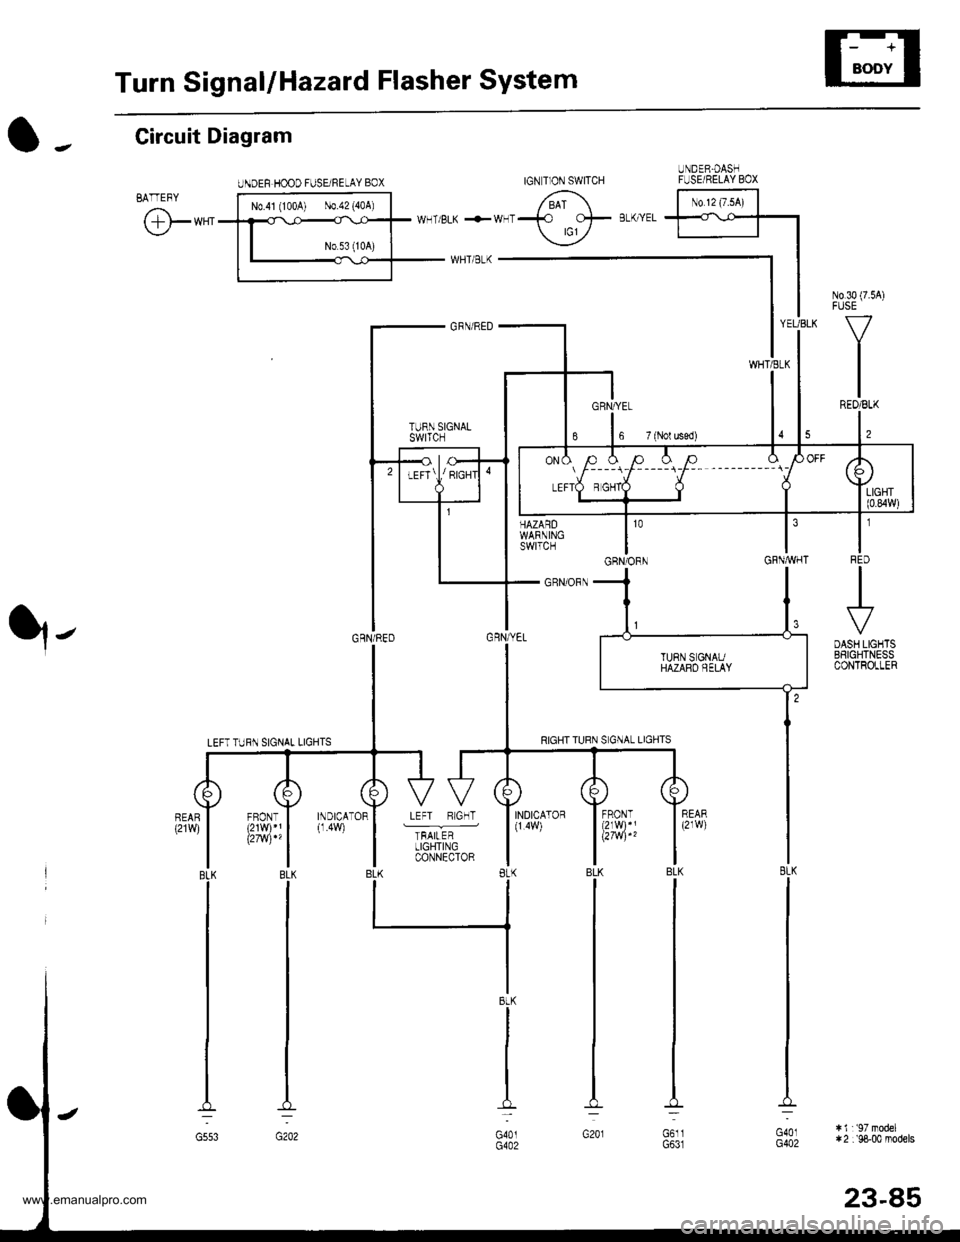 HONDA CR-V 1997 RD1-RD3 / 1.G User Guide 
Turn SignallHazard Flasher System
UNDEF HOOD FUSE/NELAY BOX
N0.30 (7.54)FUSE
V
IREO/BLK
l,
tIFqD
.+
DASH LIGHTSBSIGHTNESSCONTROLLER
HAZARDWARNINGswtTcH
_ GRN/ORN
YEUBLK
WHTiELK
GRNAVHT
O -. Circuit 